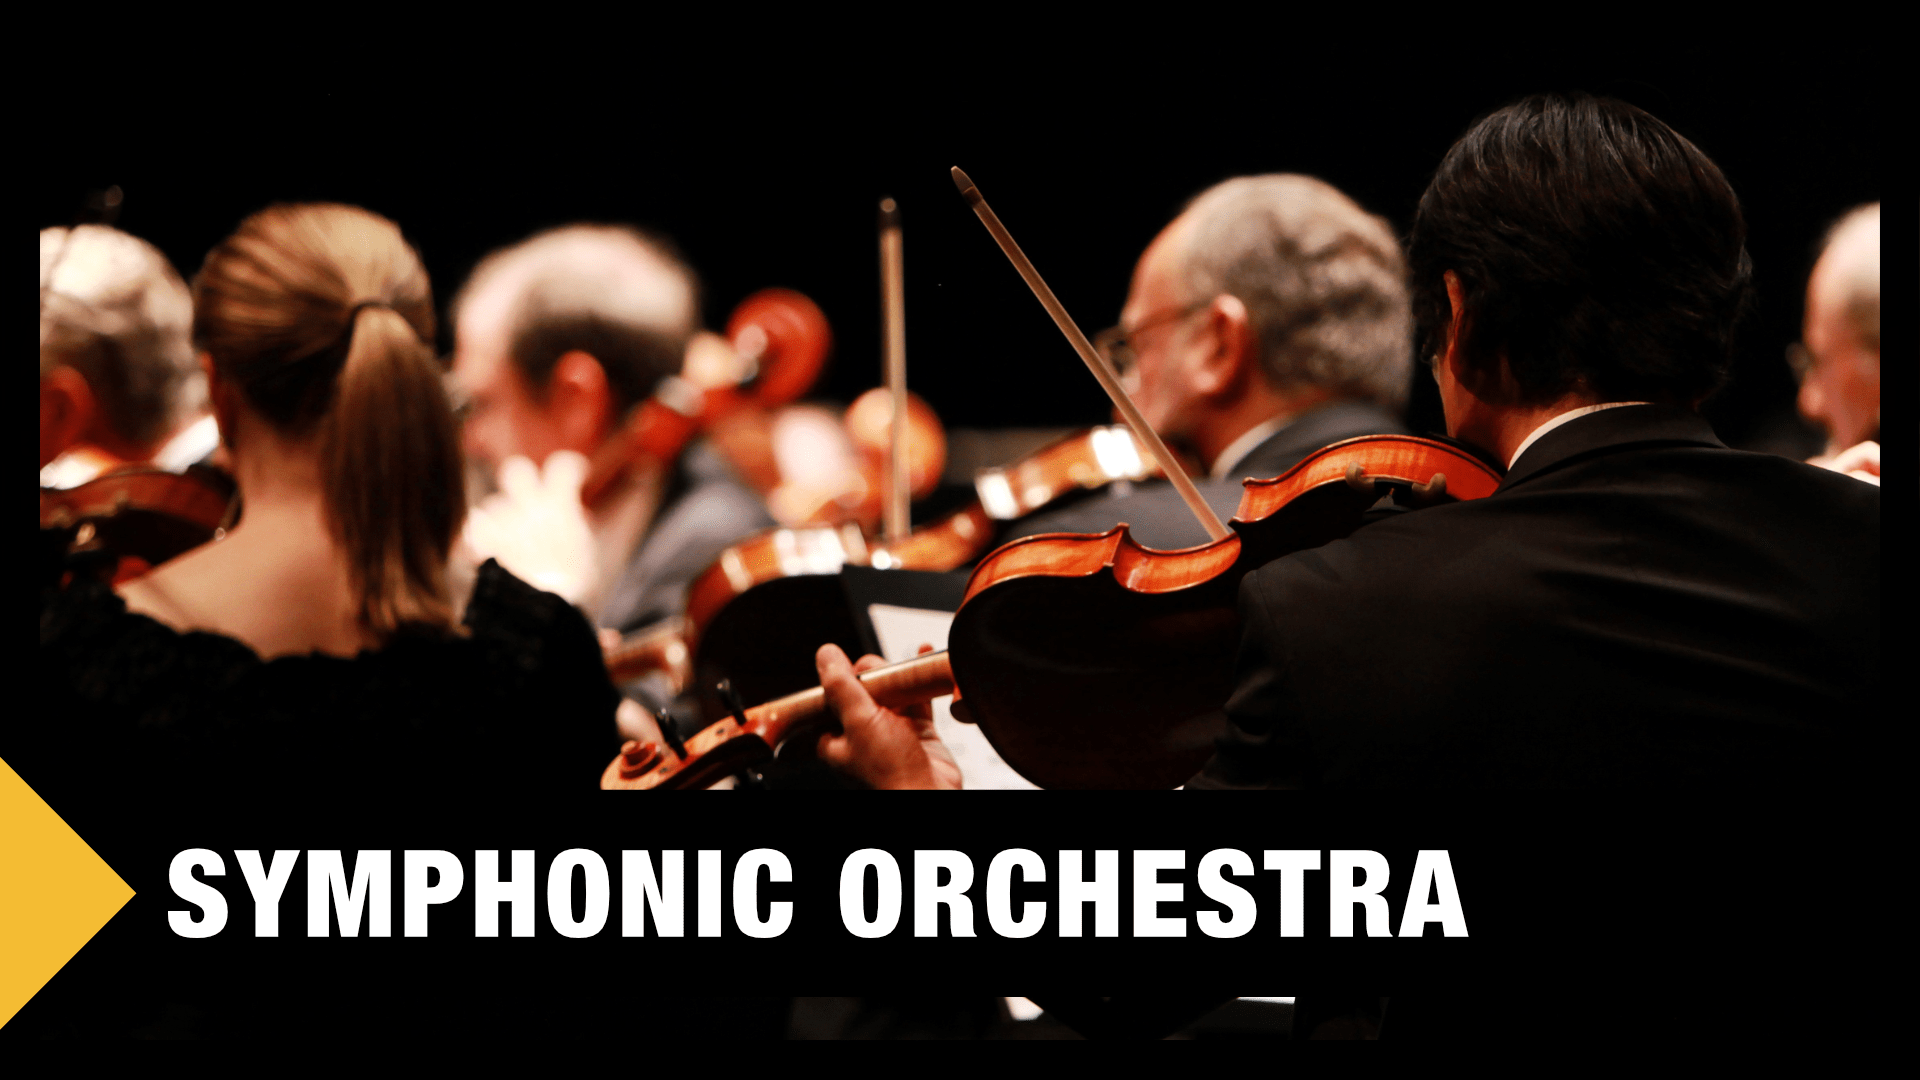 best free orchestra vst